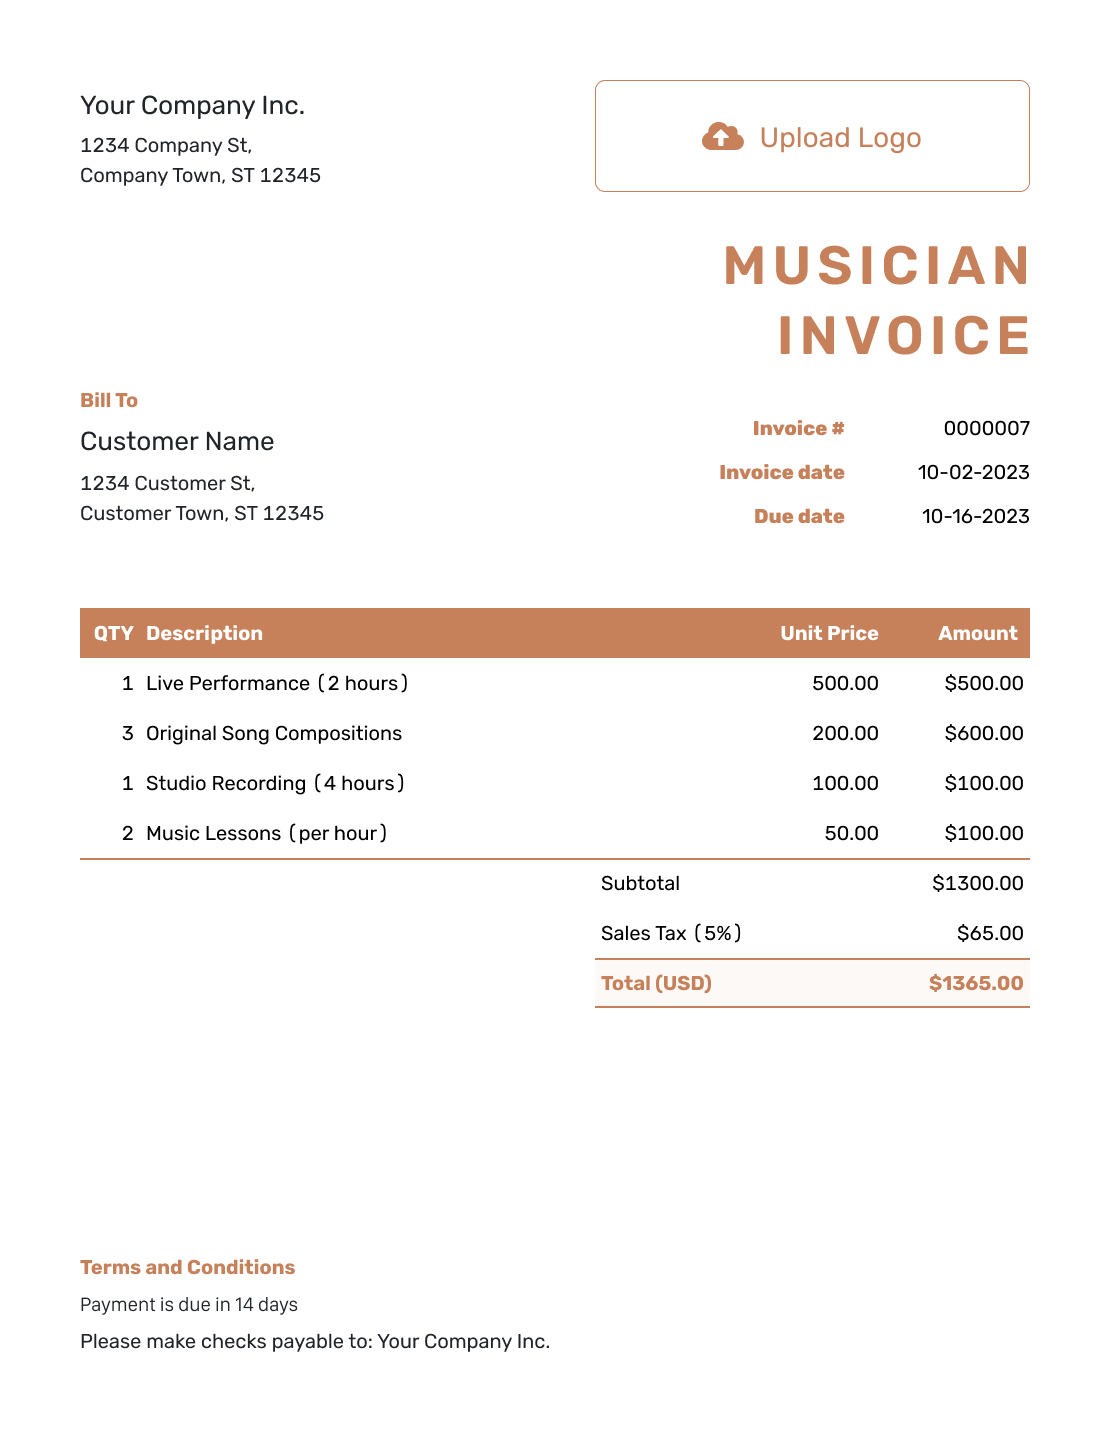 Standard Musician Invoice Template